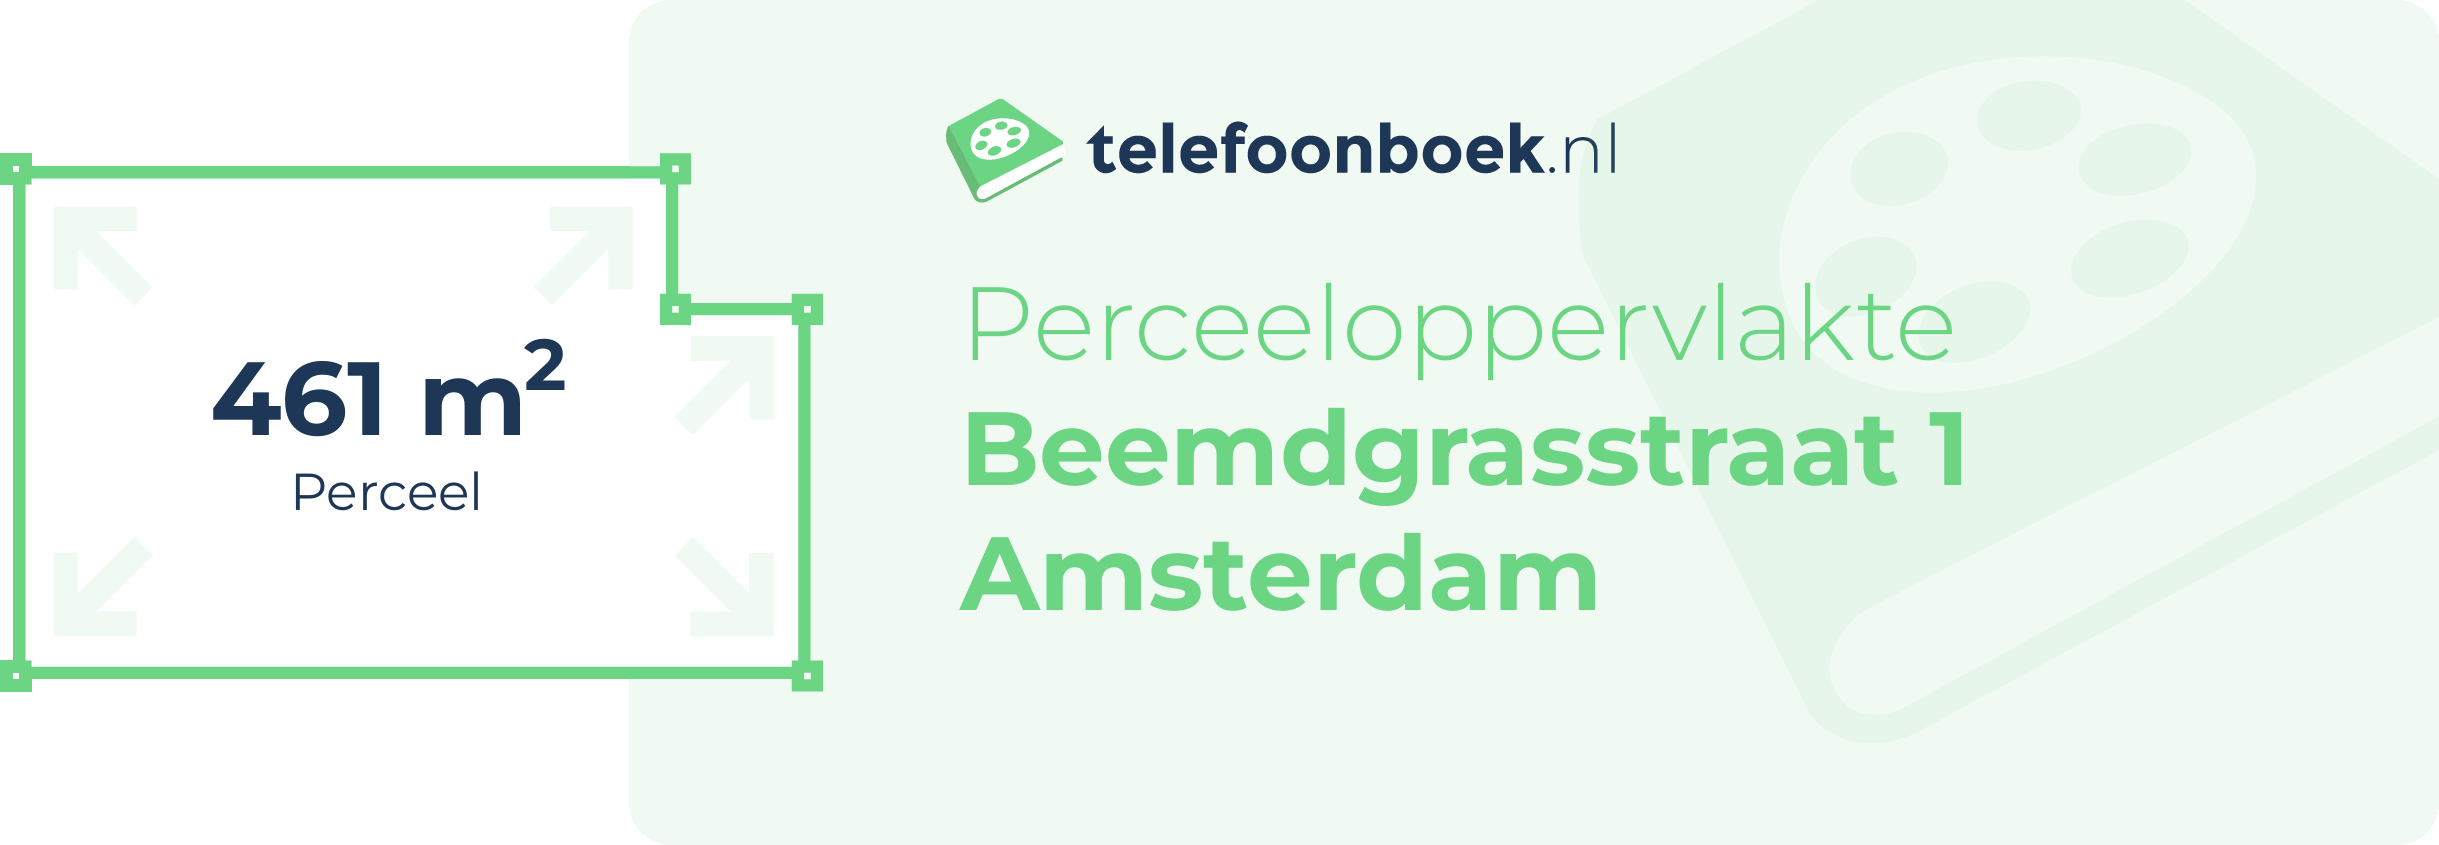 Perceeloppervlakte Beemdgrasstraat 1 Amsterdam